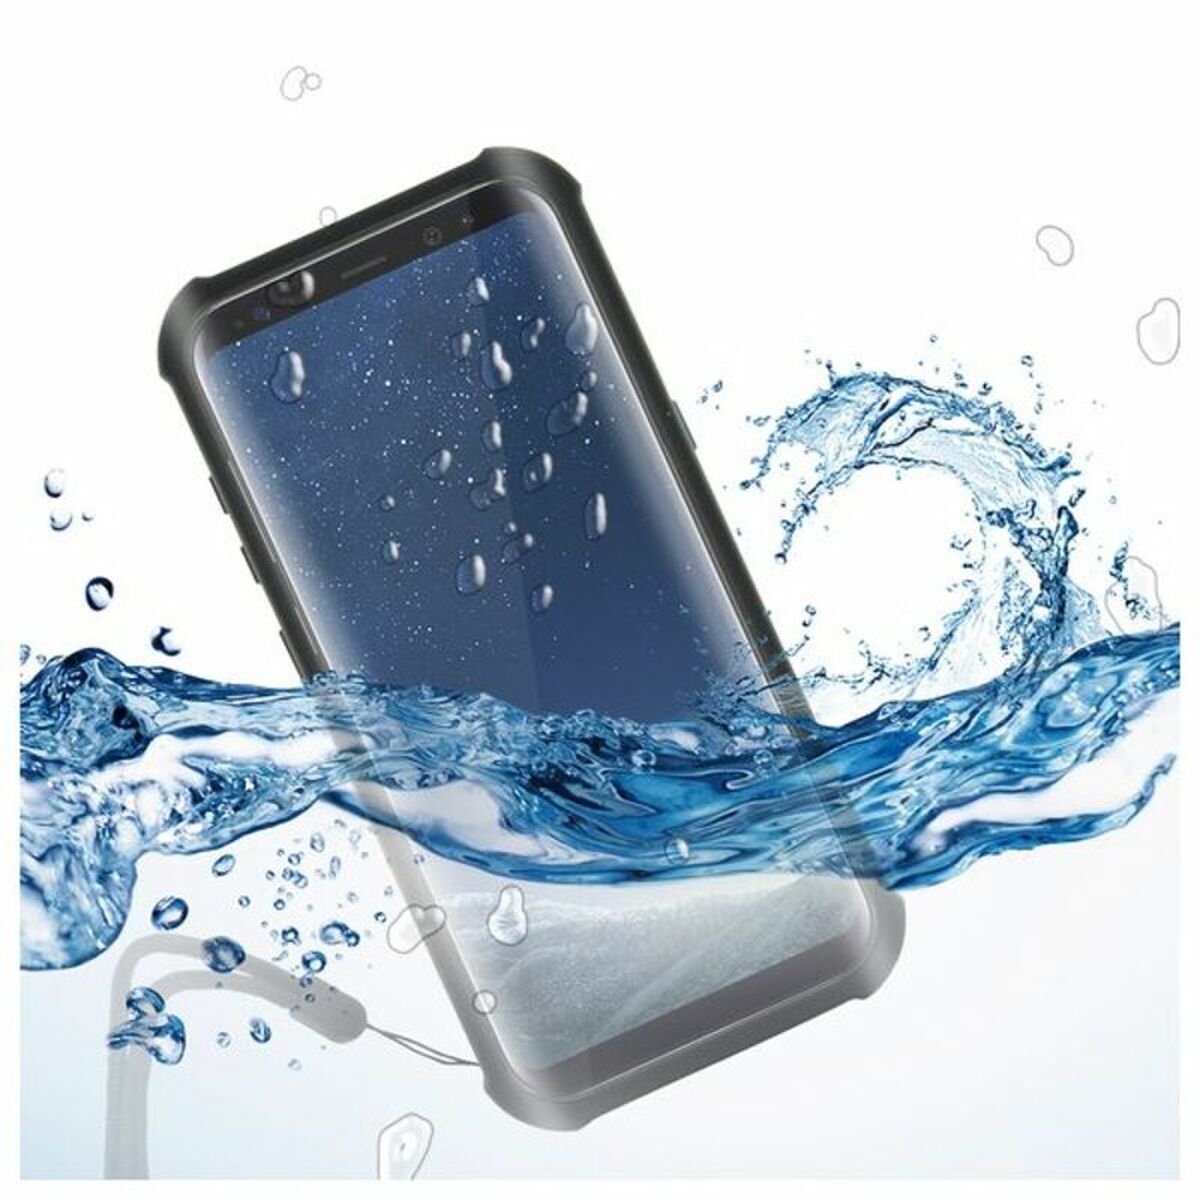 Husă Acvatică Samsung Galaxy S8+ Aqua Case Negru Transparent